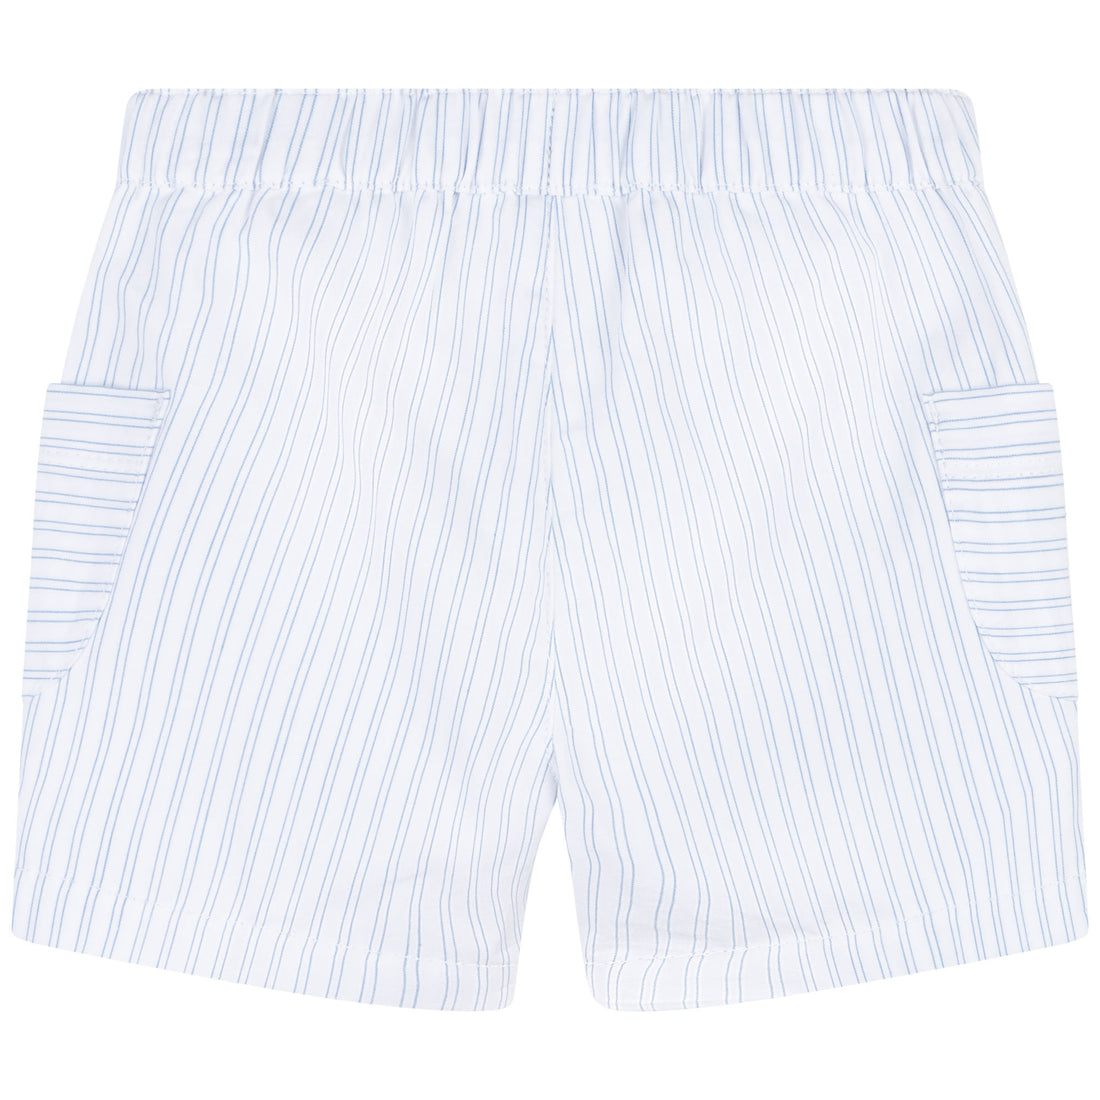 carrément-beau-t-shirt-shorts-spring-2-infant-white-pale-blue-carr-s22-y08042-n28-3y- (4)